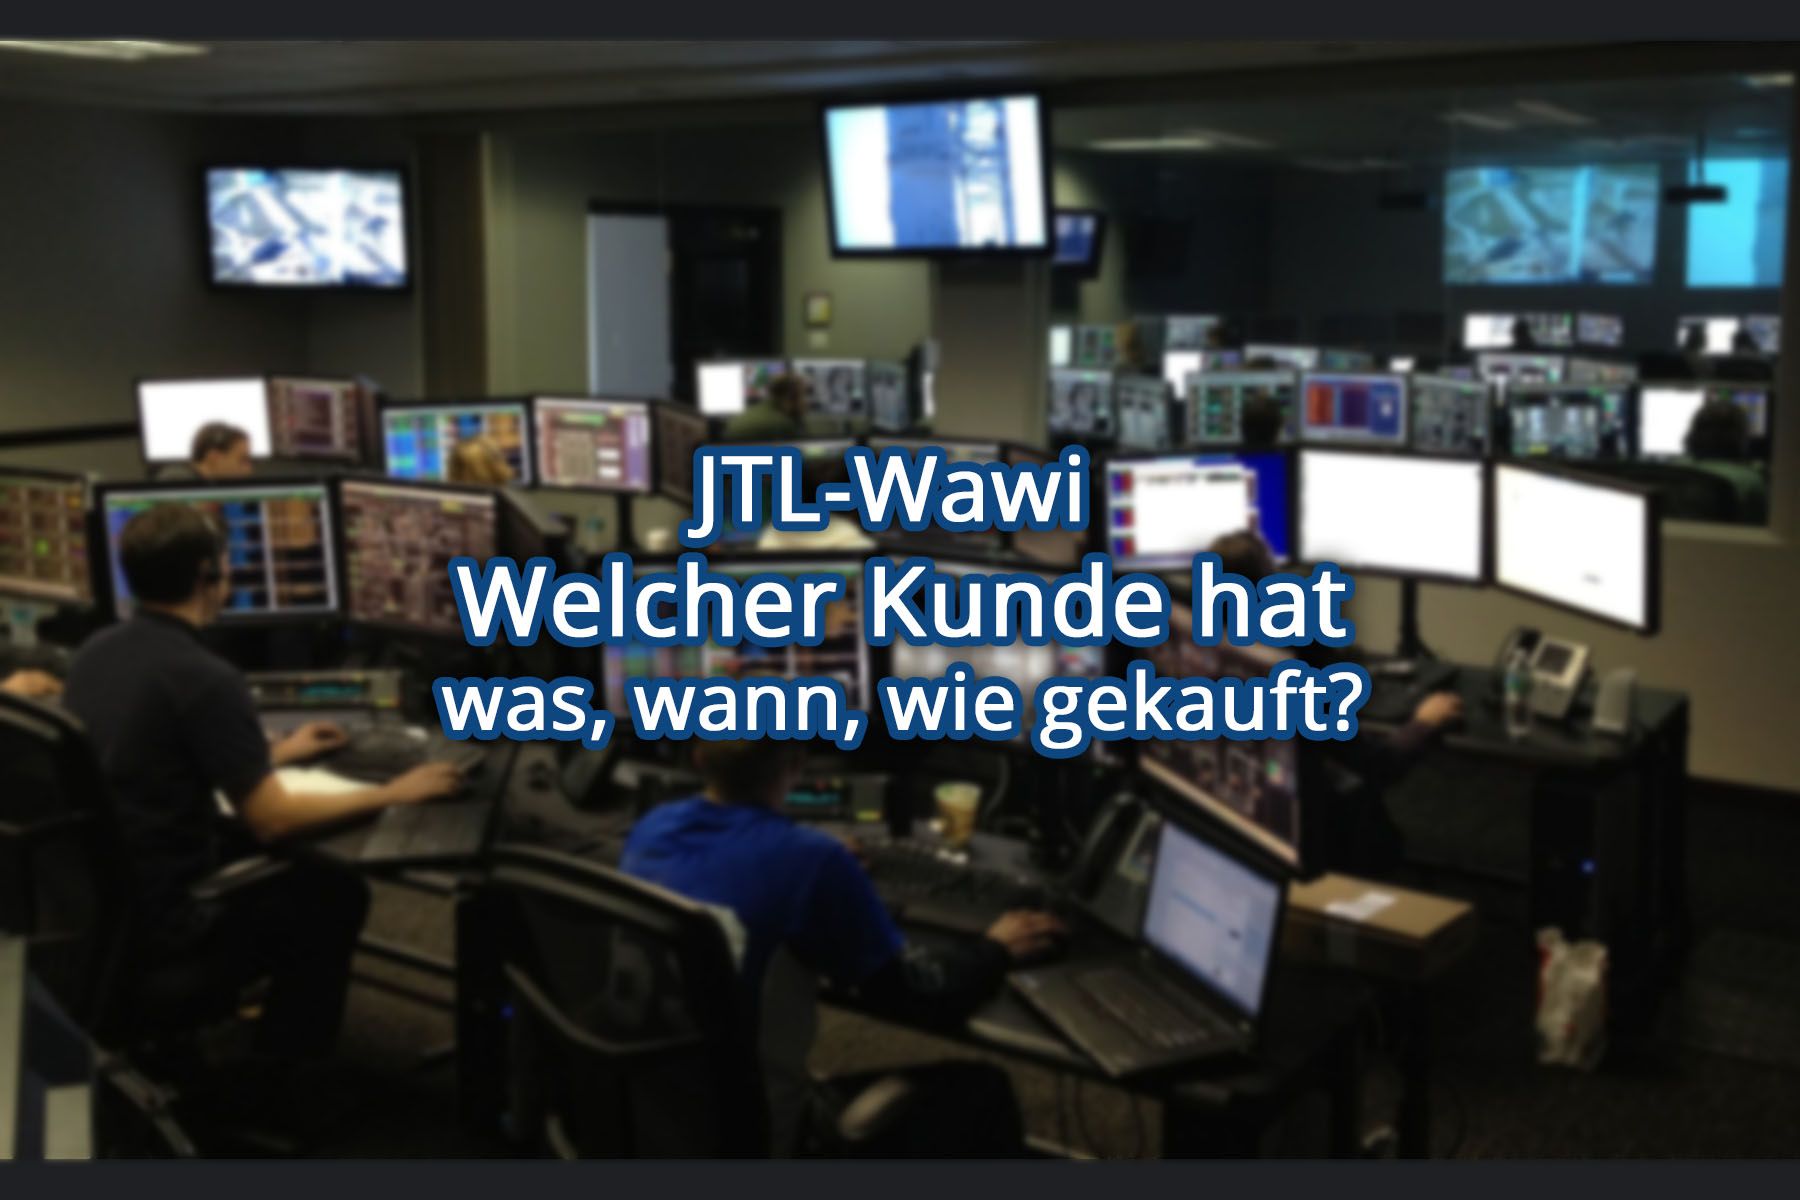 JTL-Wawi 1.0 – Welcher Kunde hat was, wann, wie gekauft